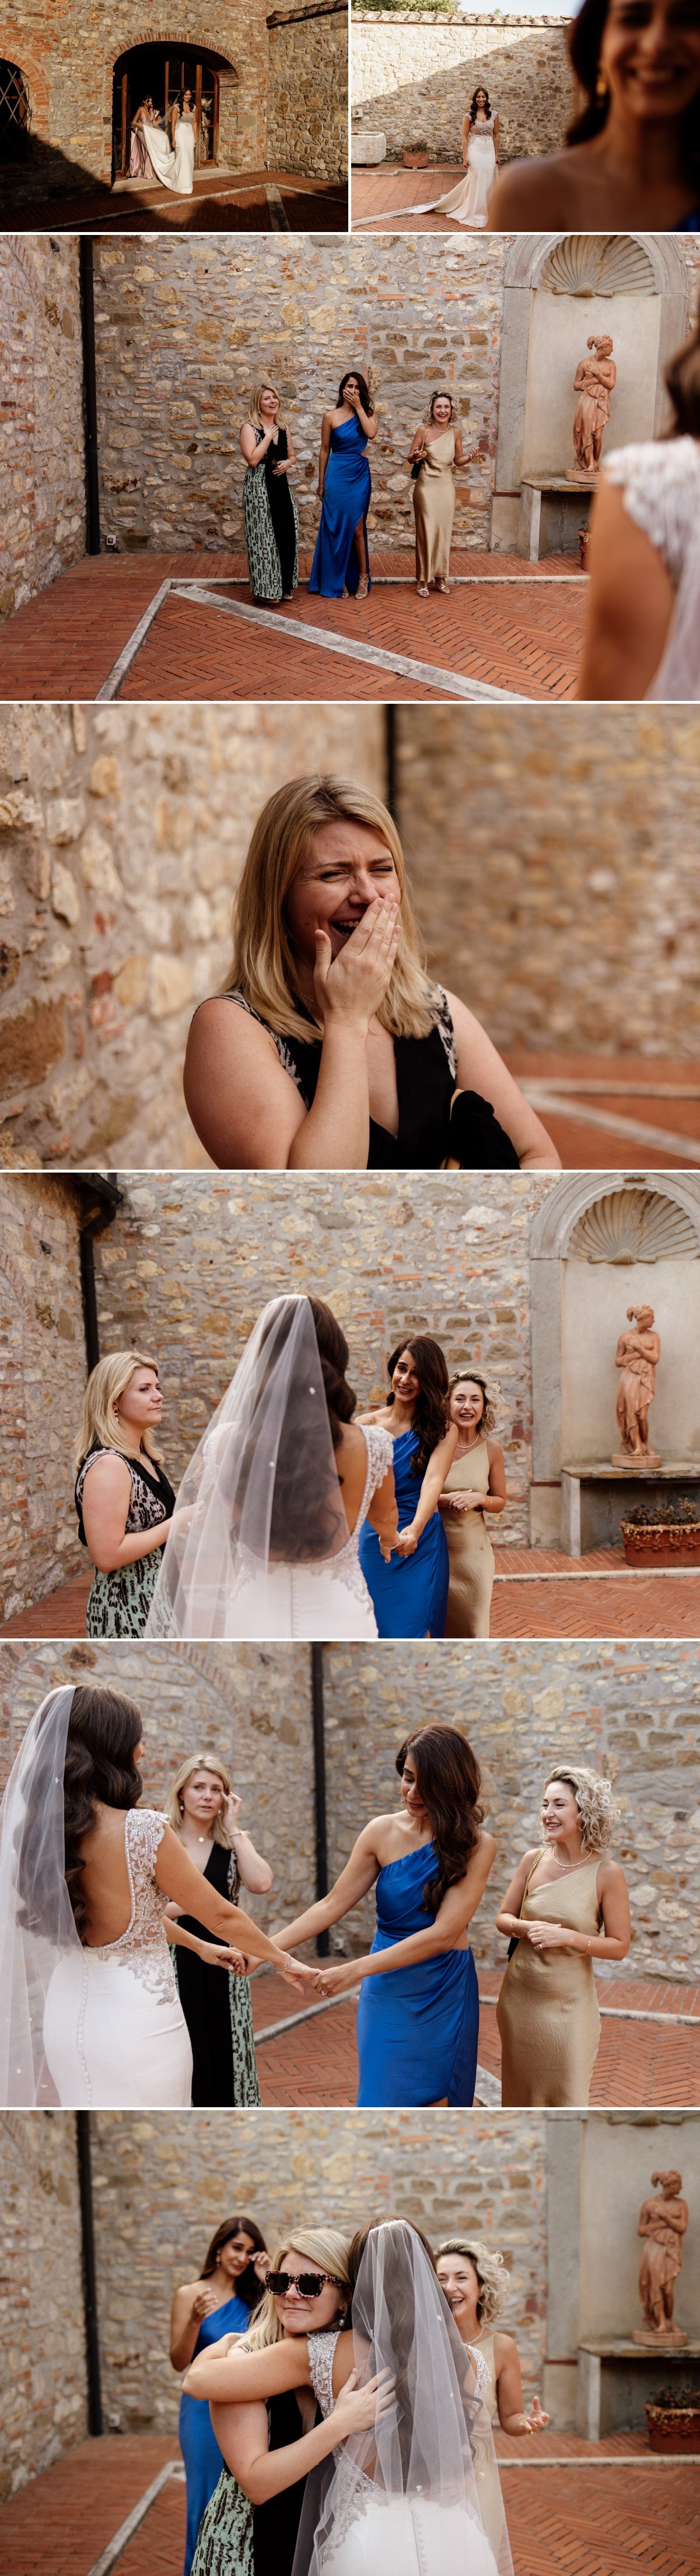 tuscany-wedding-dallk-07.jpg